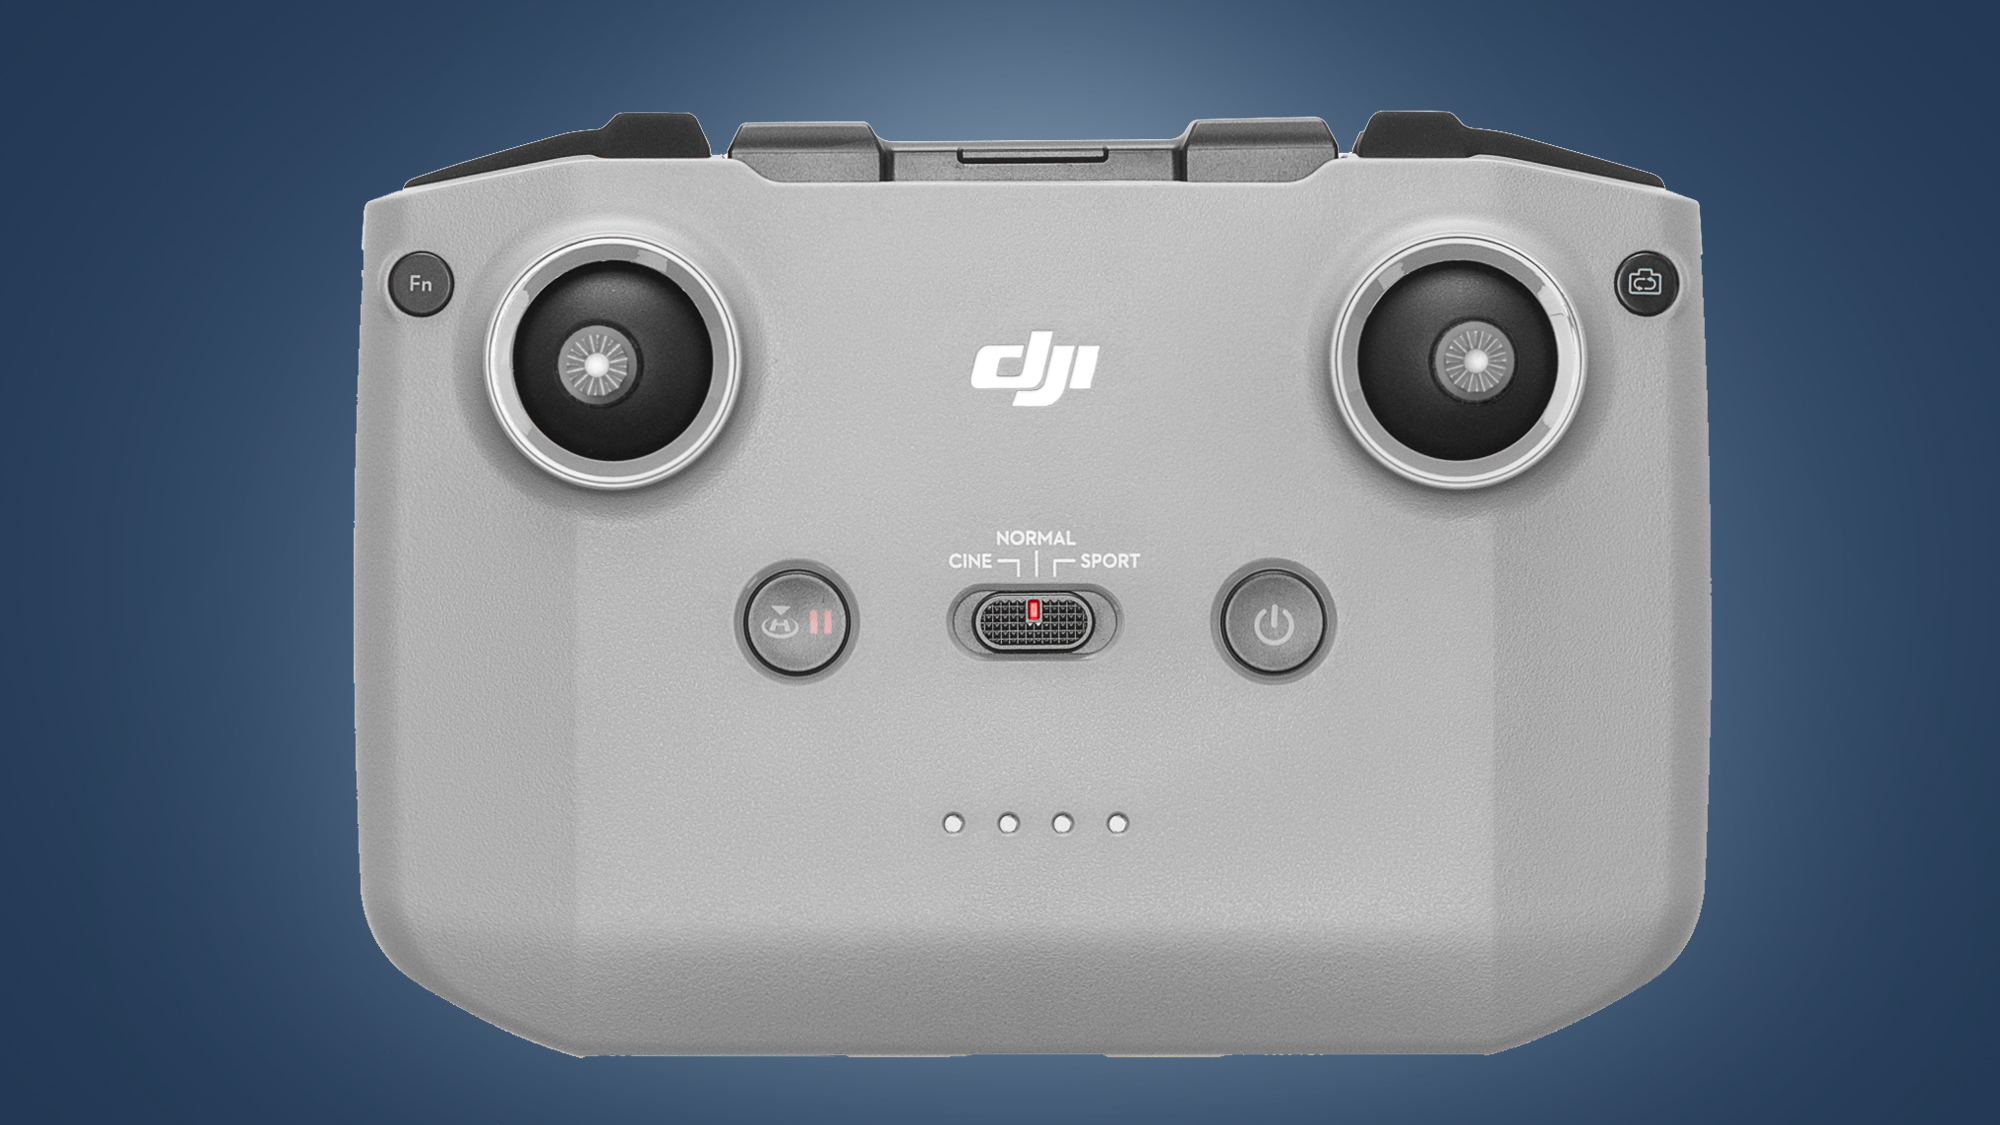 DJi Mini 2 SE controller on a blue background